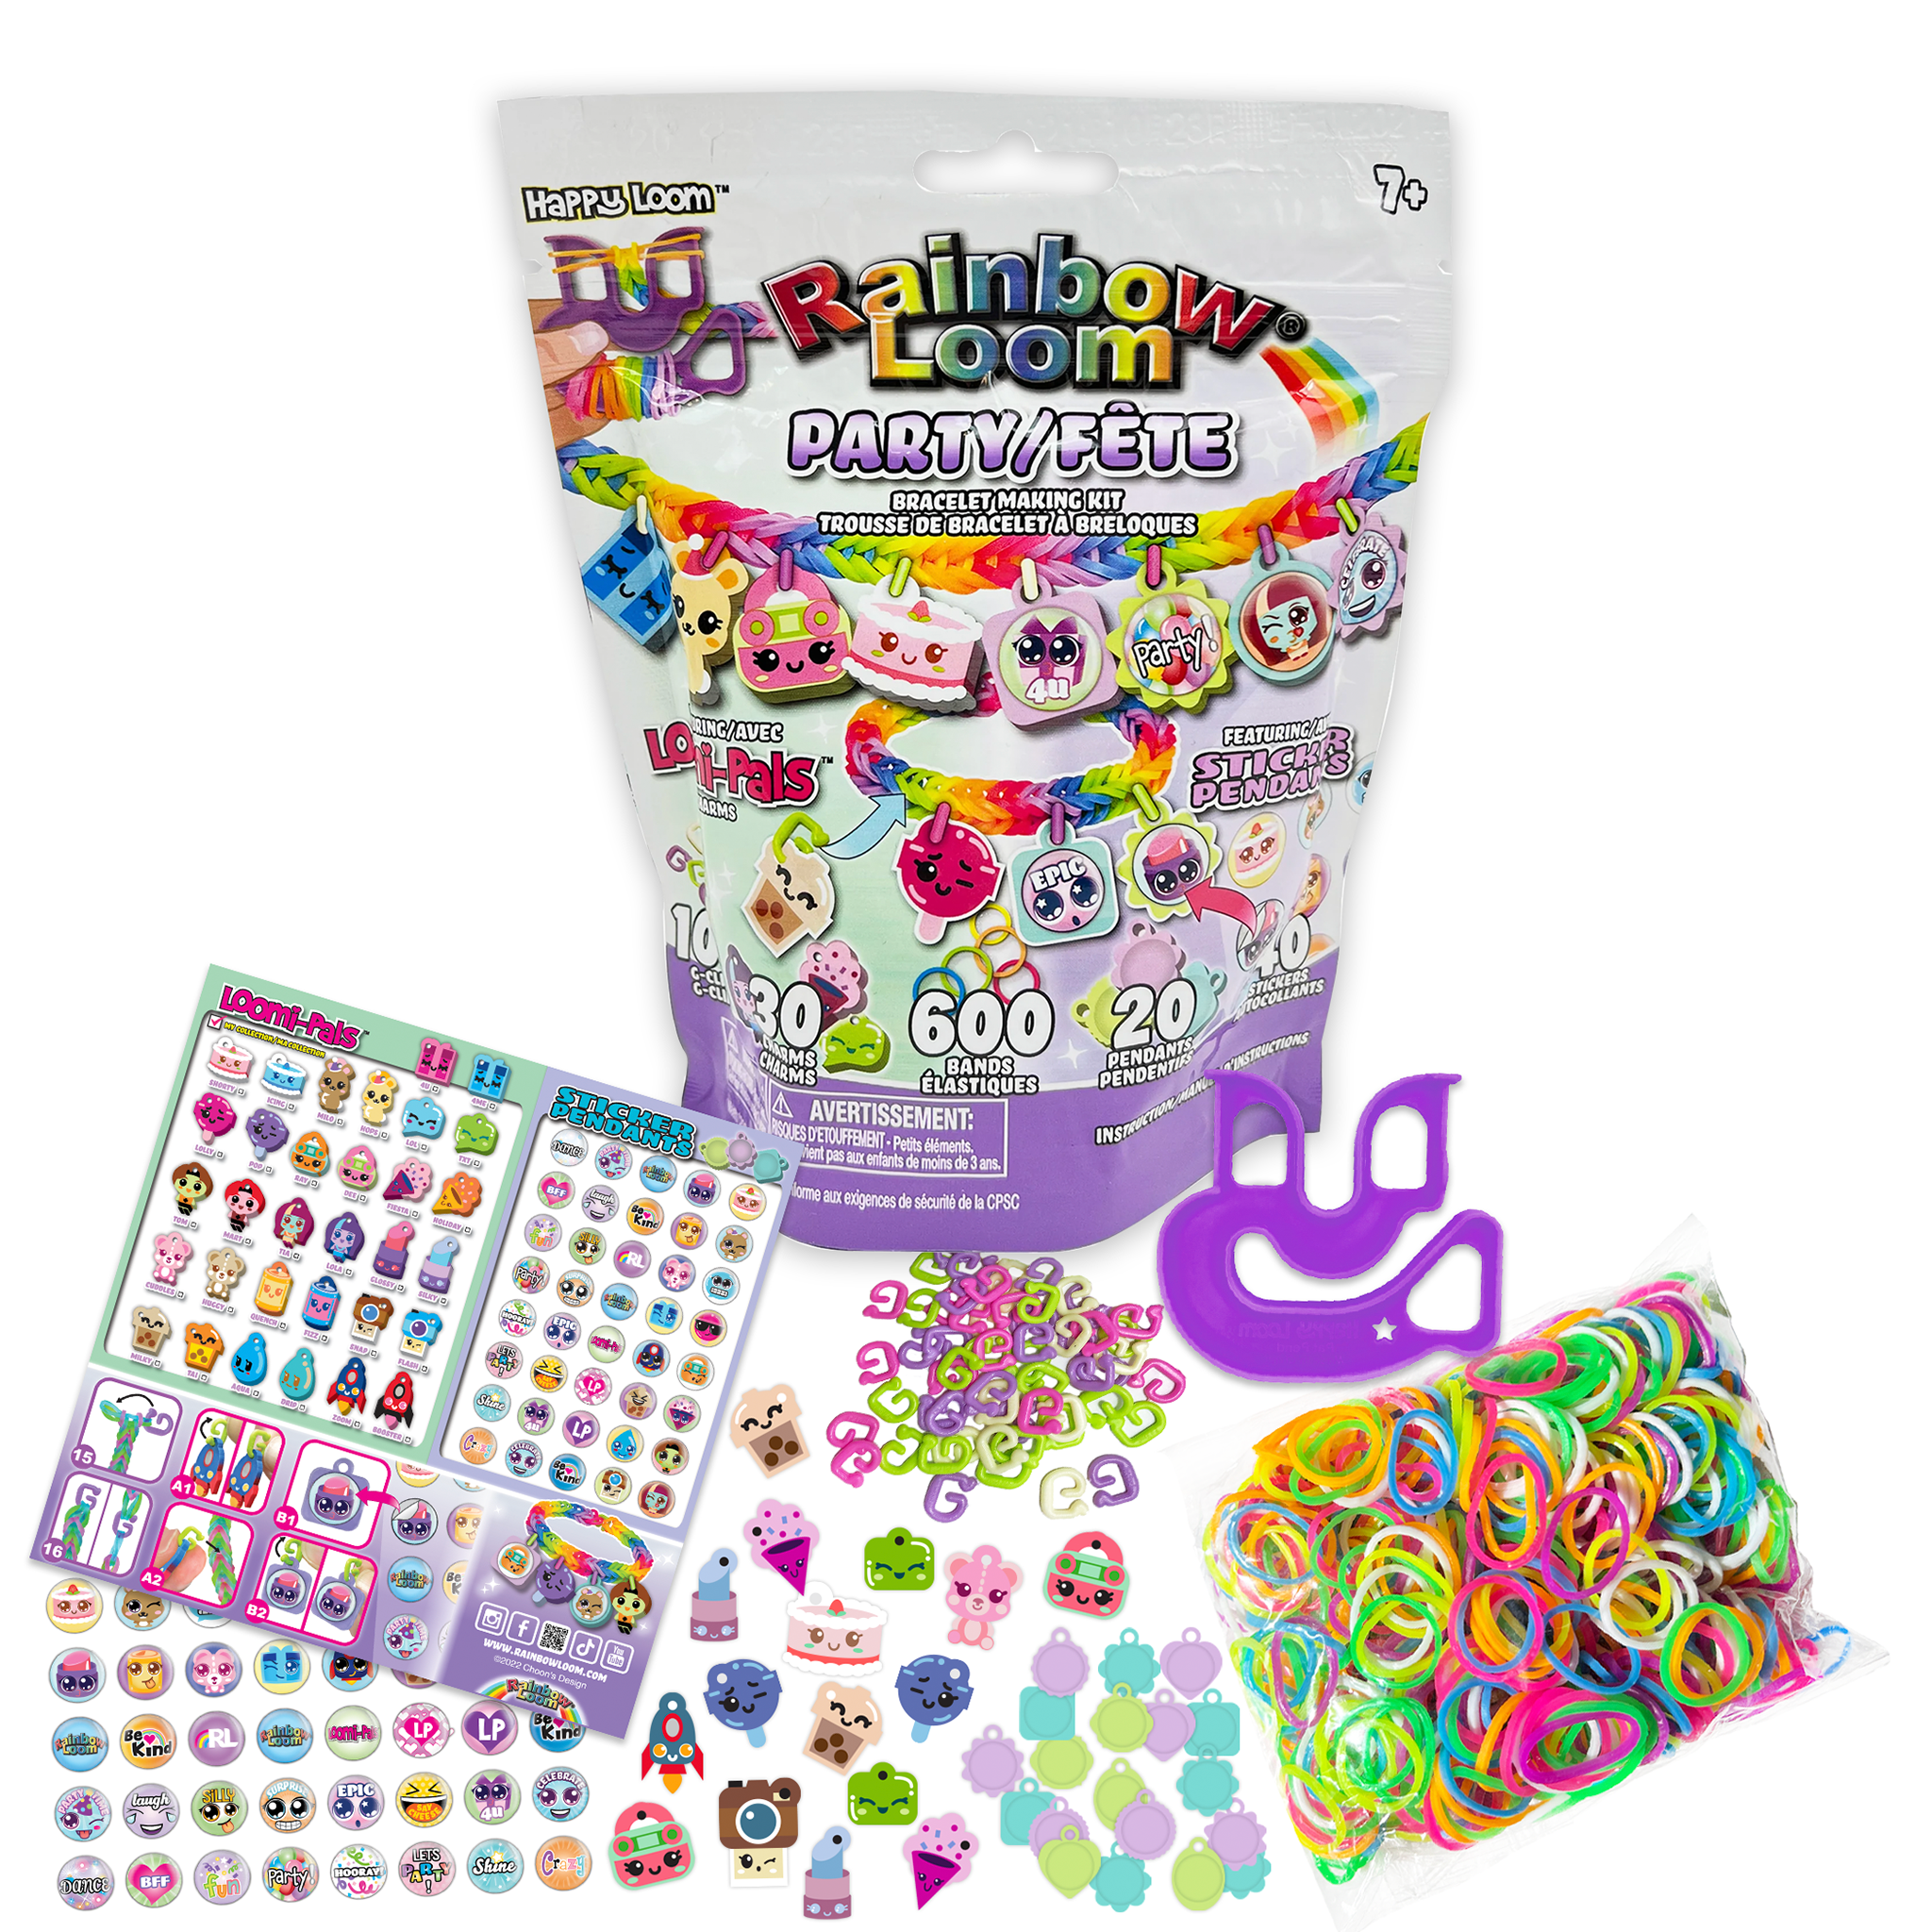 Toys - Make it Real Bedazzle Charm Bracelet Kit